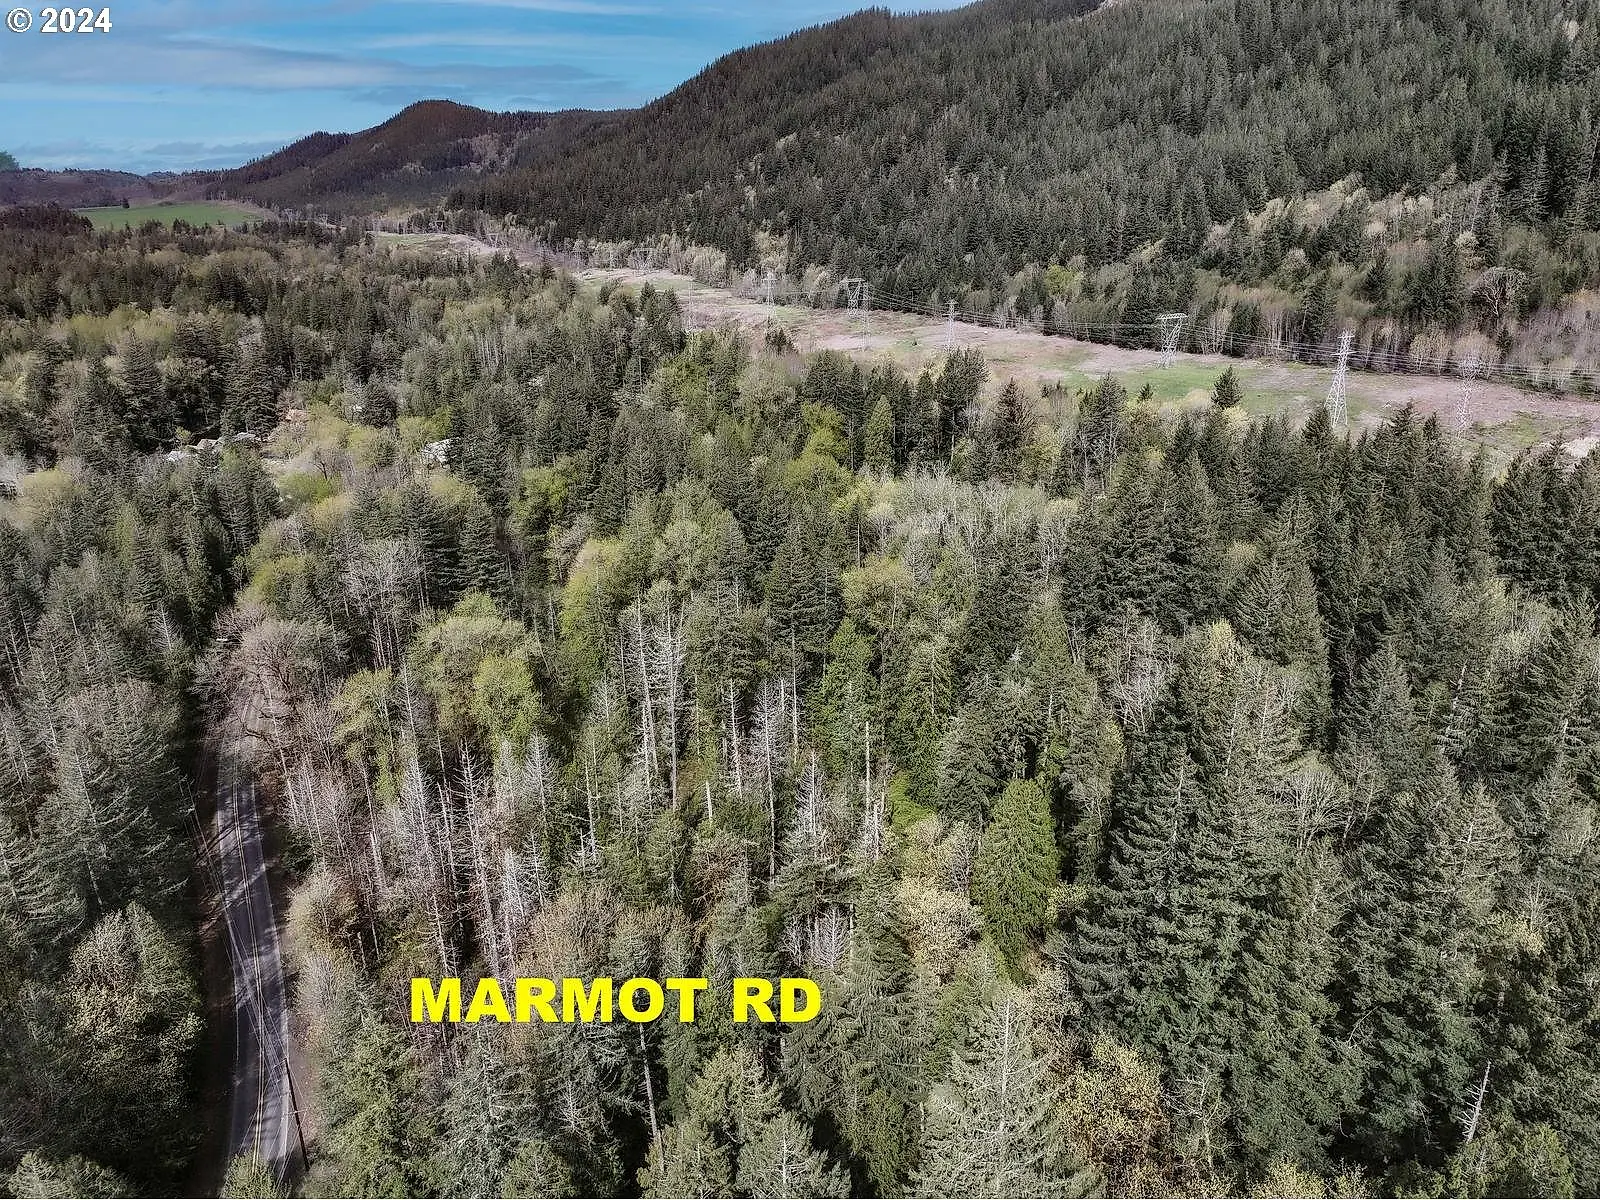 Marmot Rd